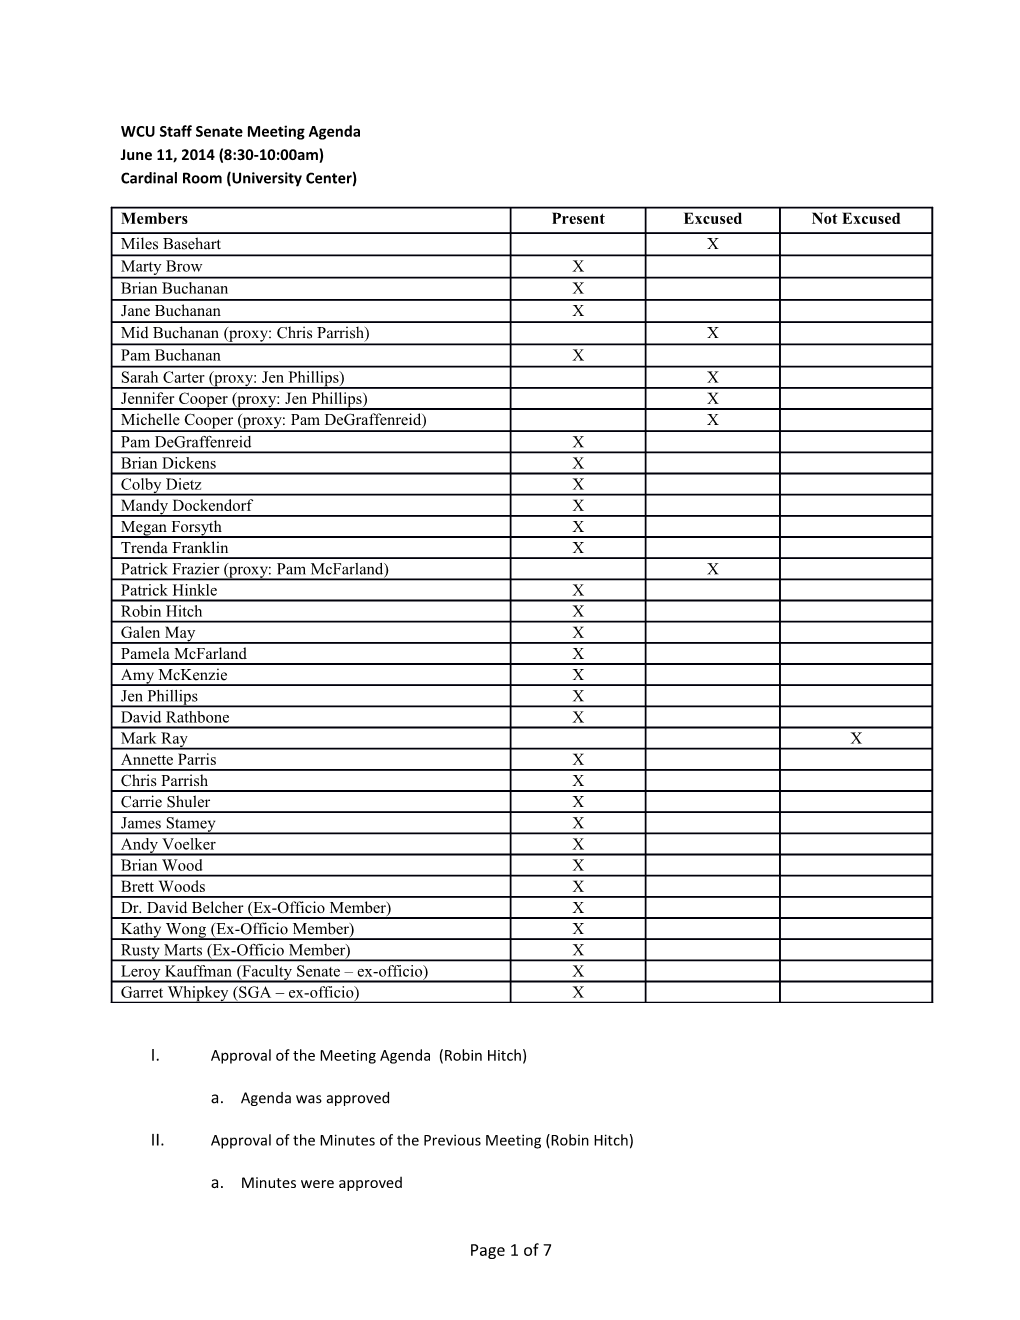 Staff Senate Minutes - June 2014